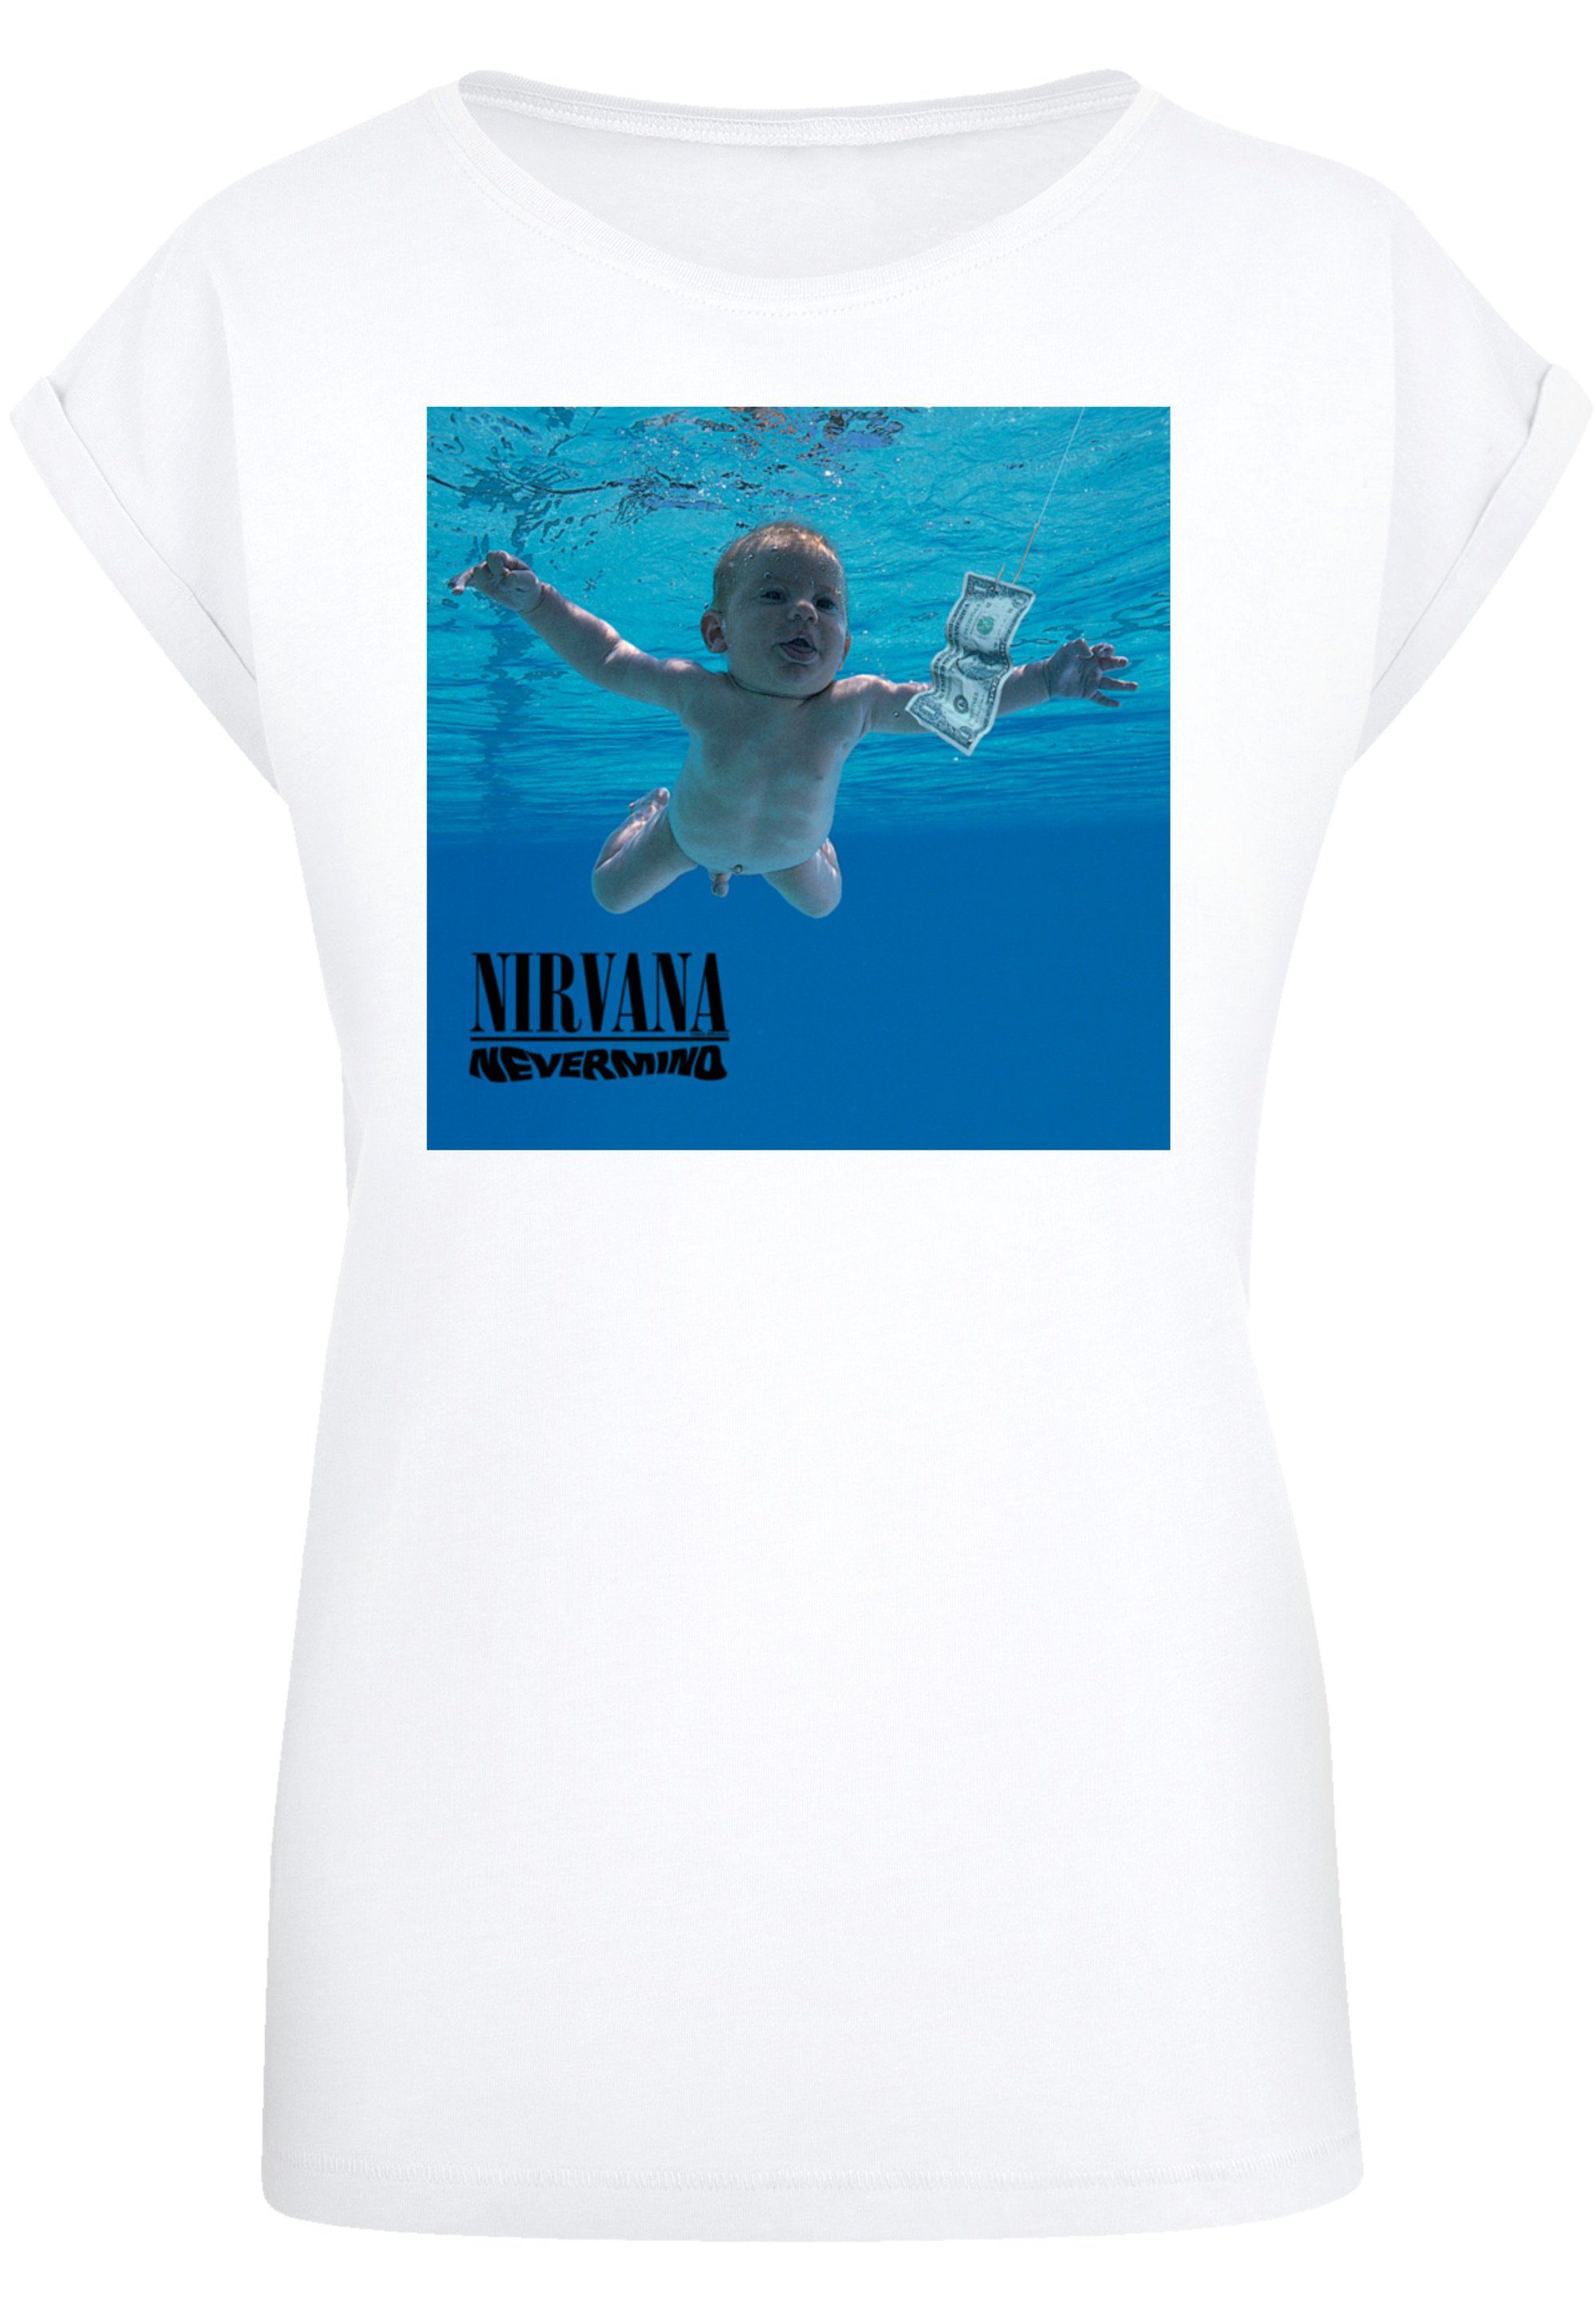 weiß Premium Rock Band Nevermind Qualität Album T-Shirt Nirvana F4NT4STIC